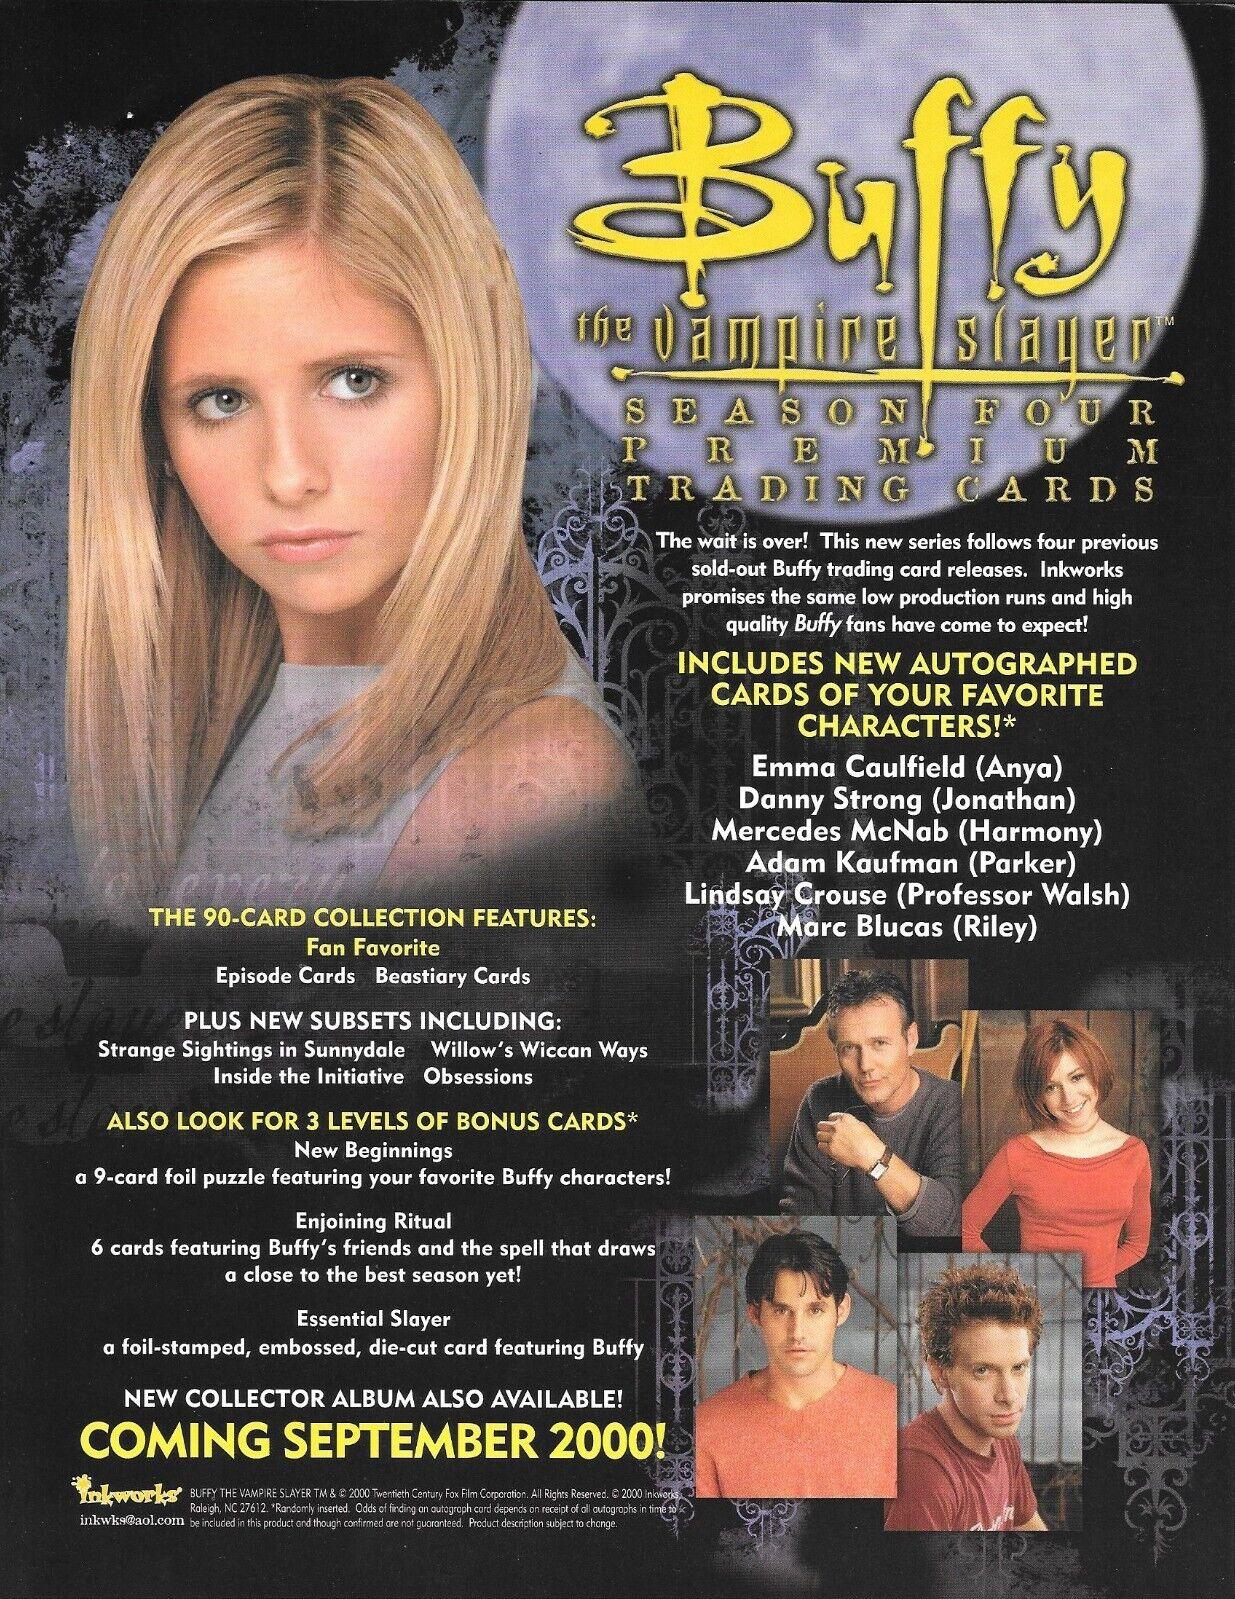 Buffy the Vampire Slayer Season 4 Trading Cards Dealer Sell Sheet